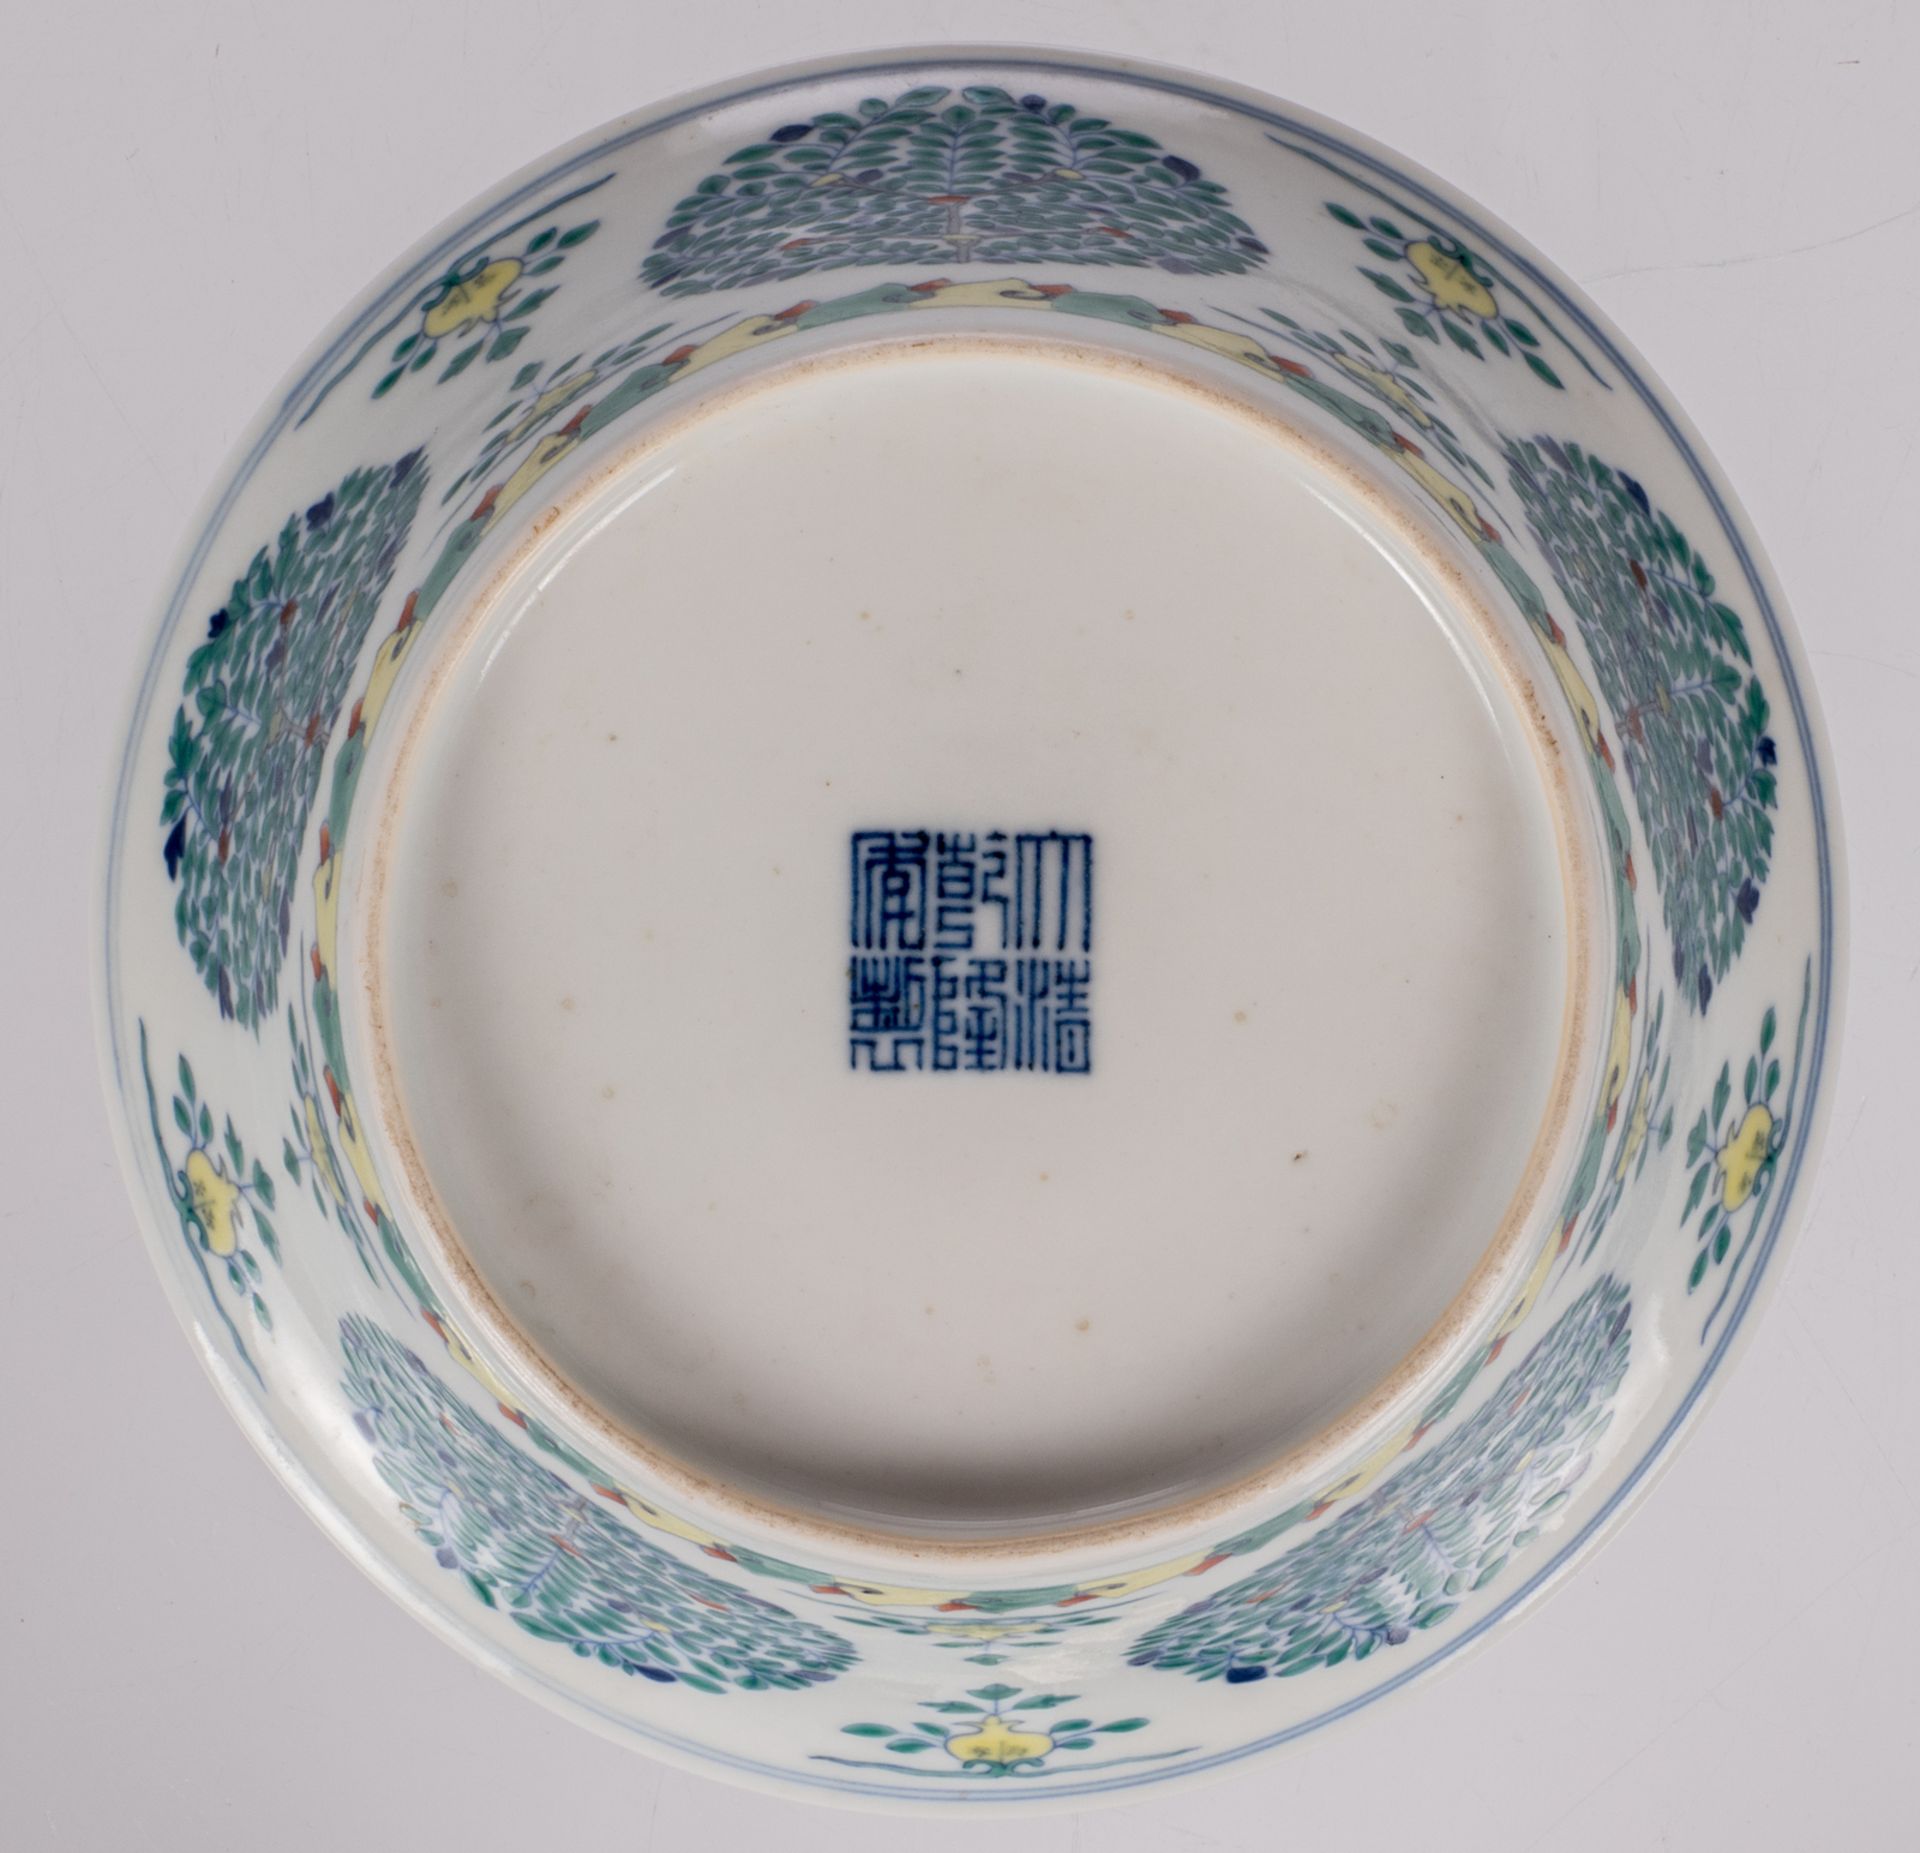 A Chinese doucai bowl, marked Qianlong, H 8,3 - Diameter 18,2 cm - Bild 6 aus 7